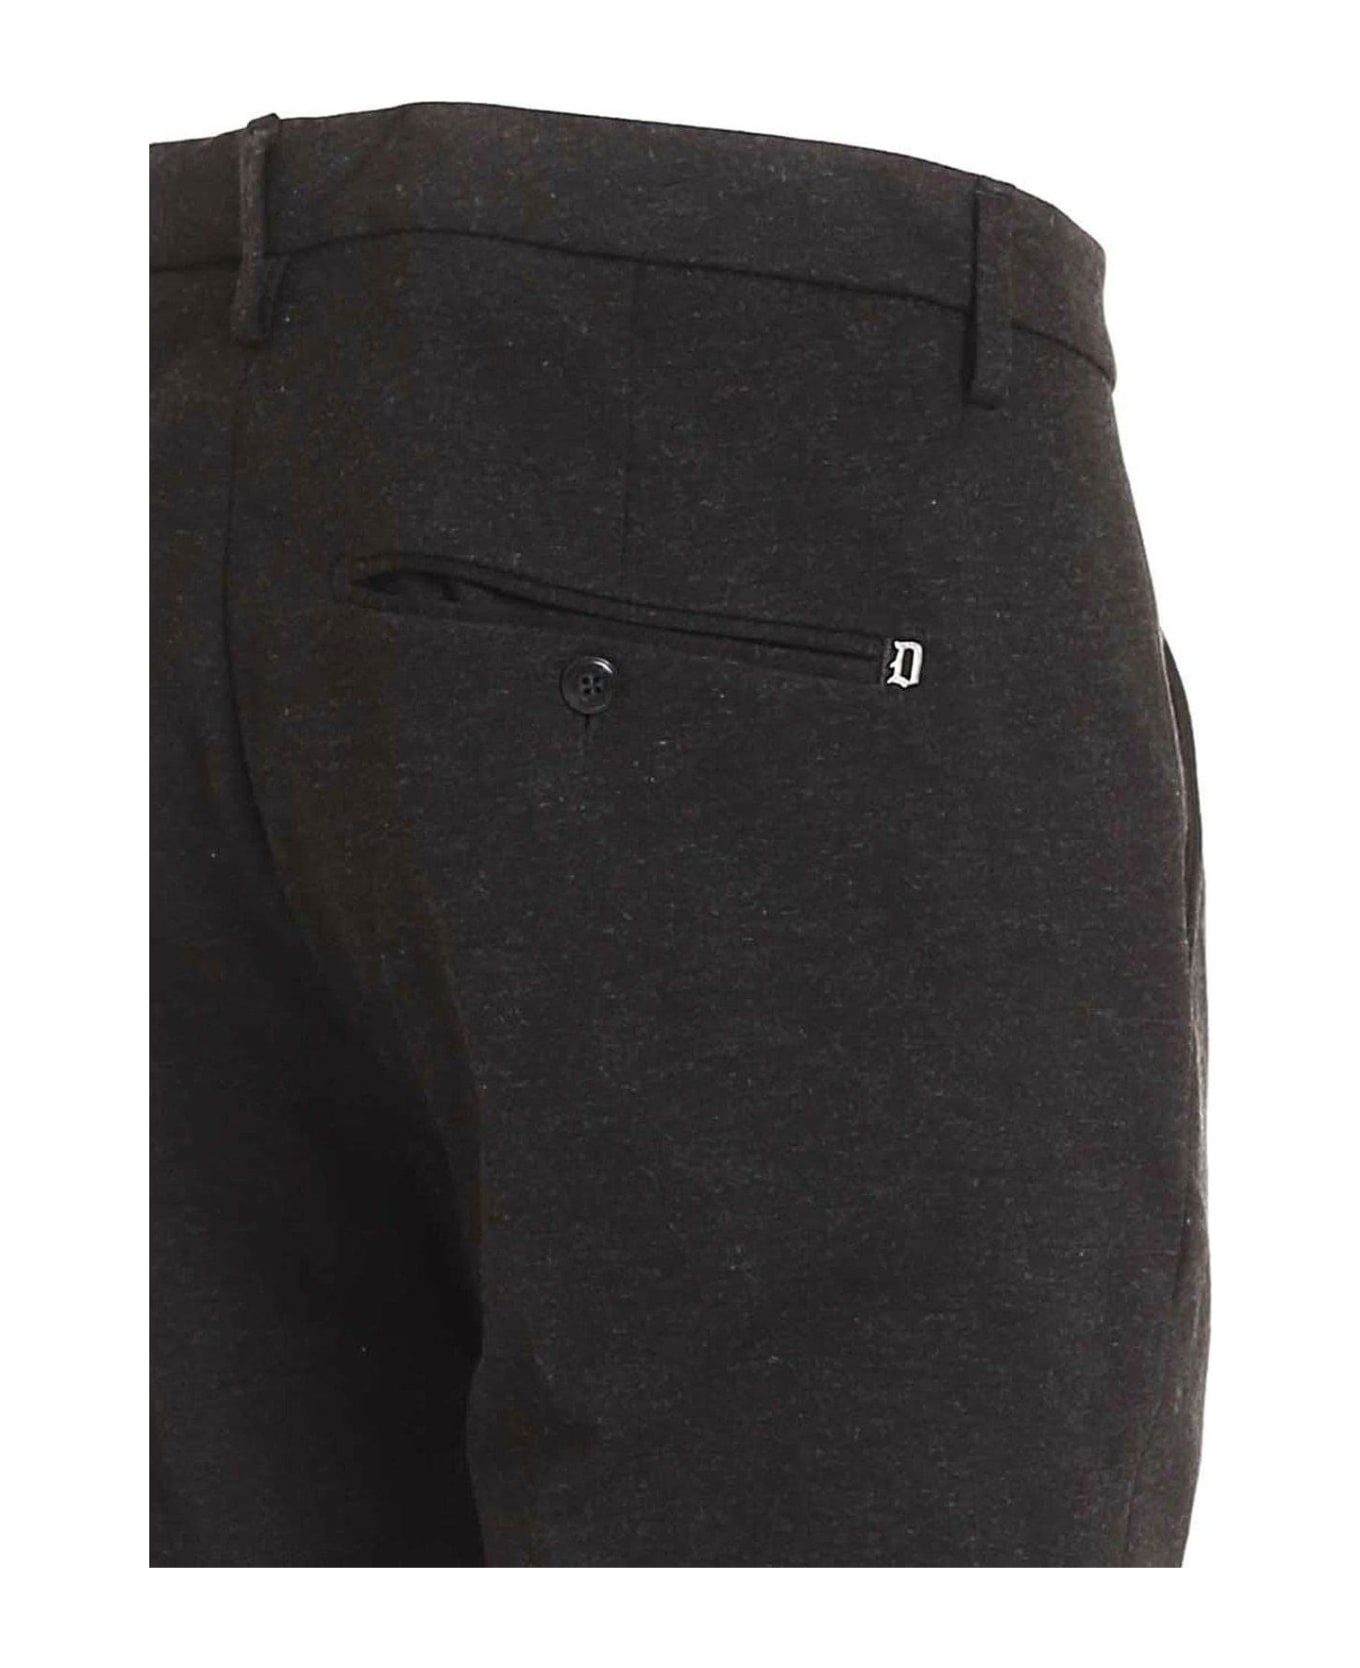 Dondup Gaubert Slim Fit Jersey Trousers - Dark grey